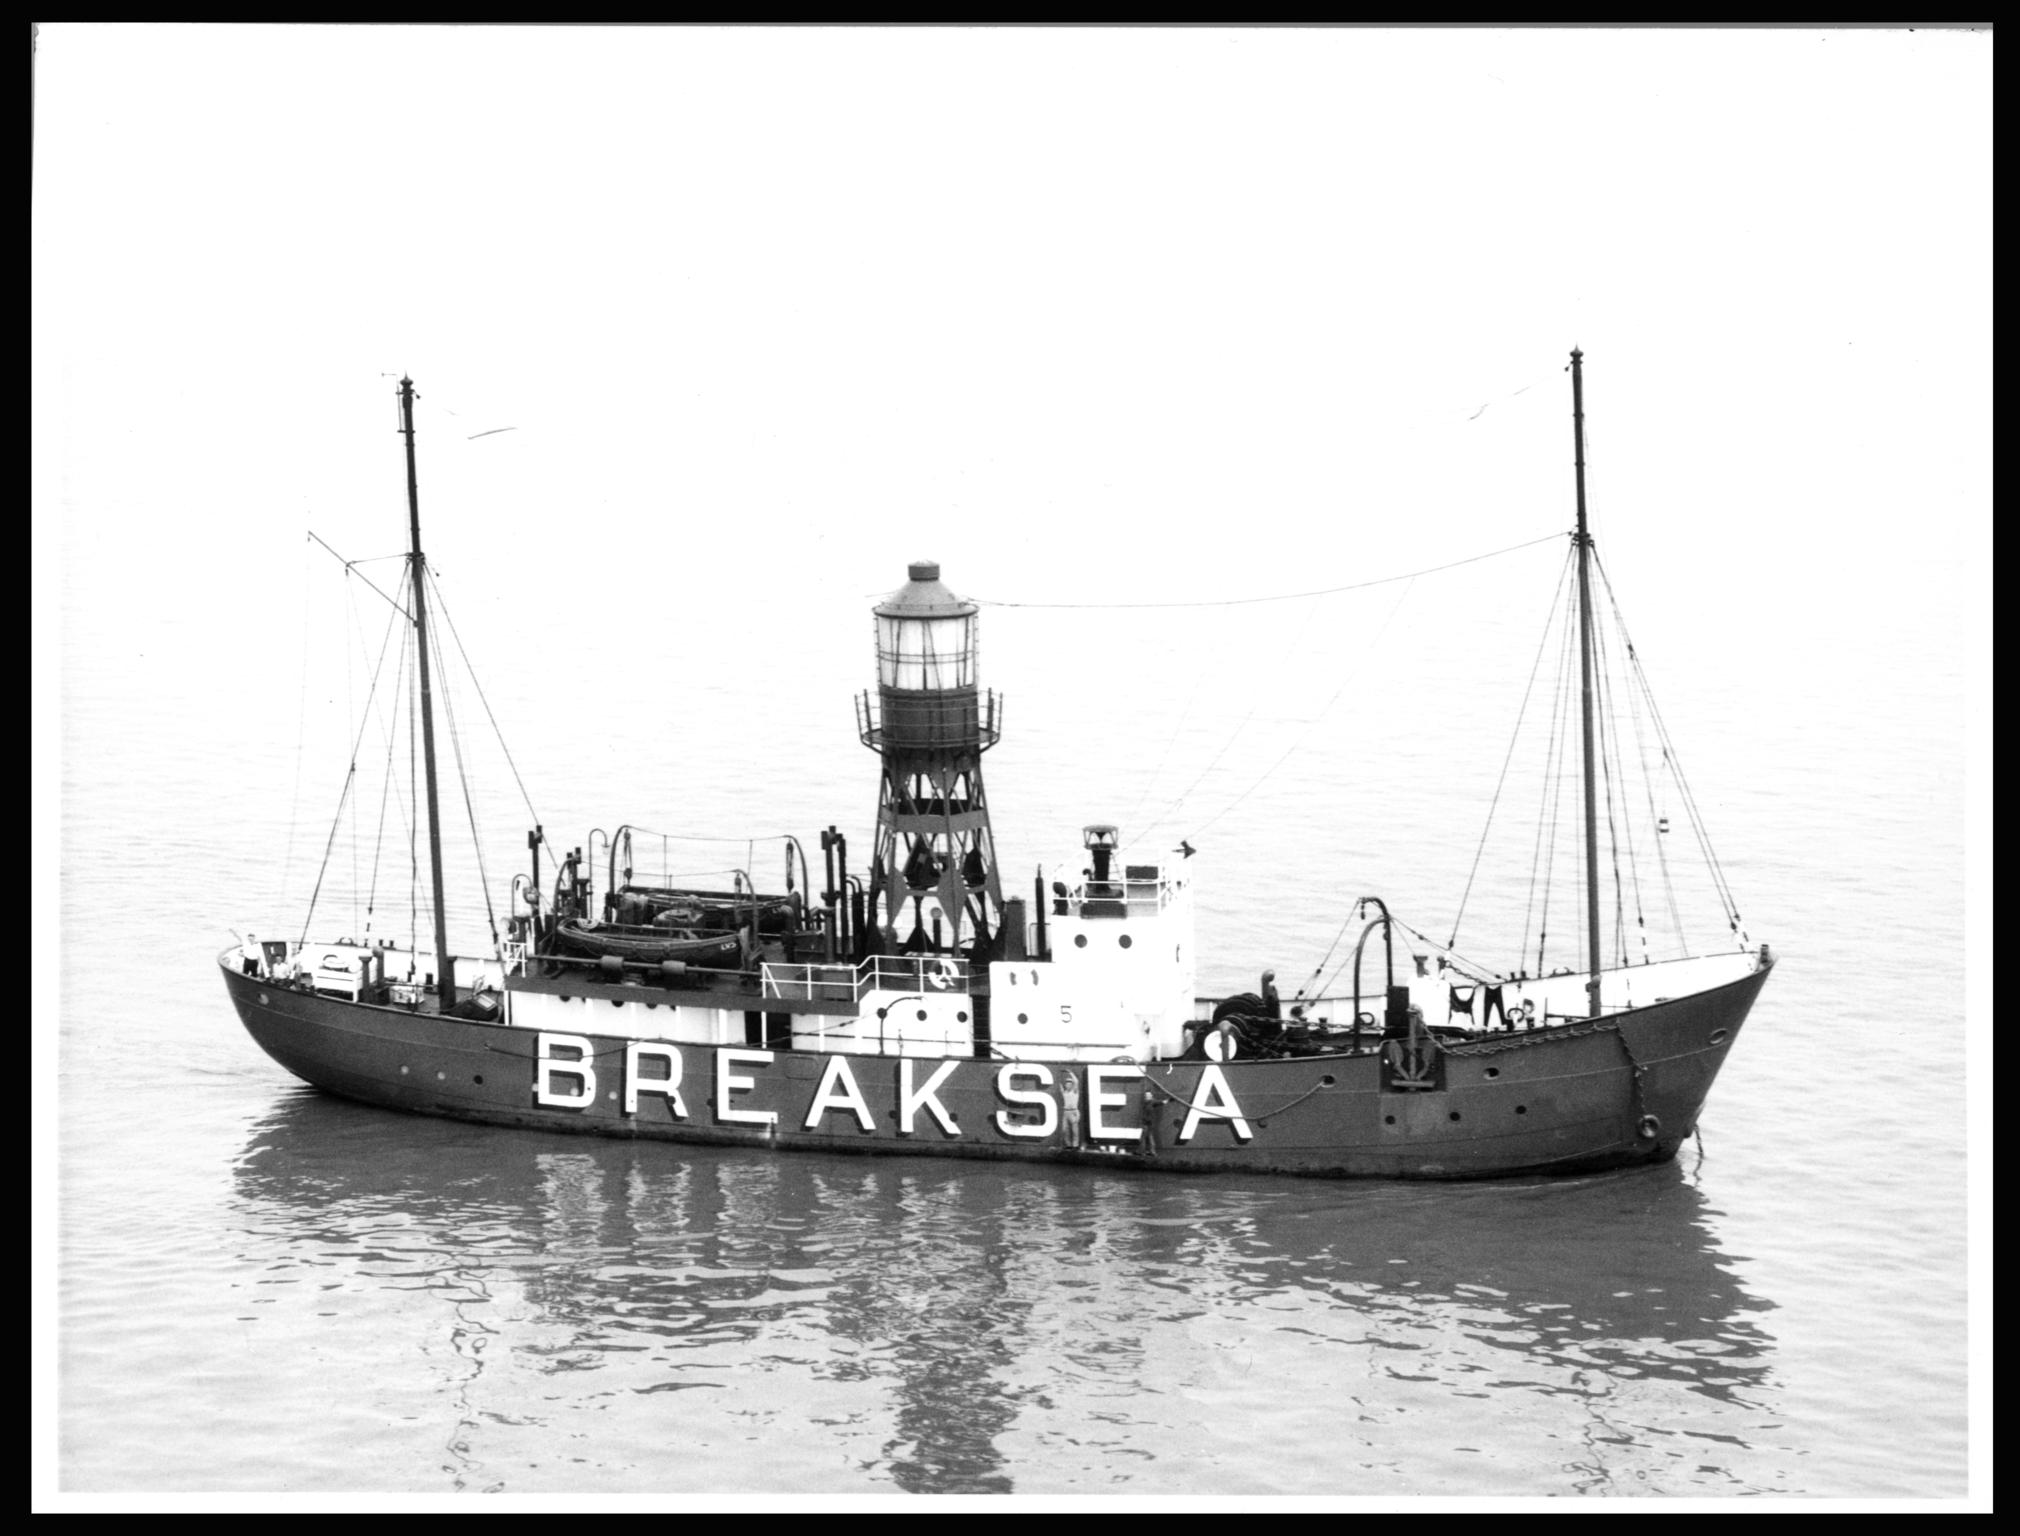 BREAKSEA light vessel, photograph